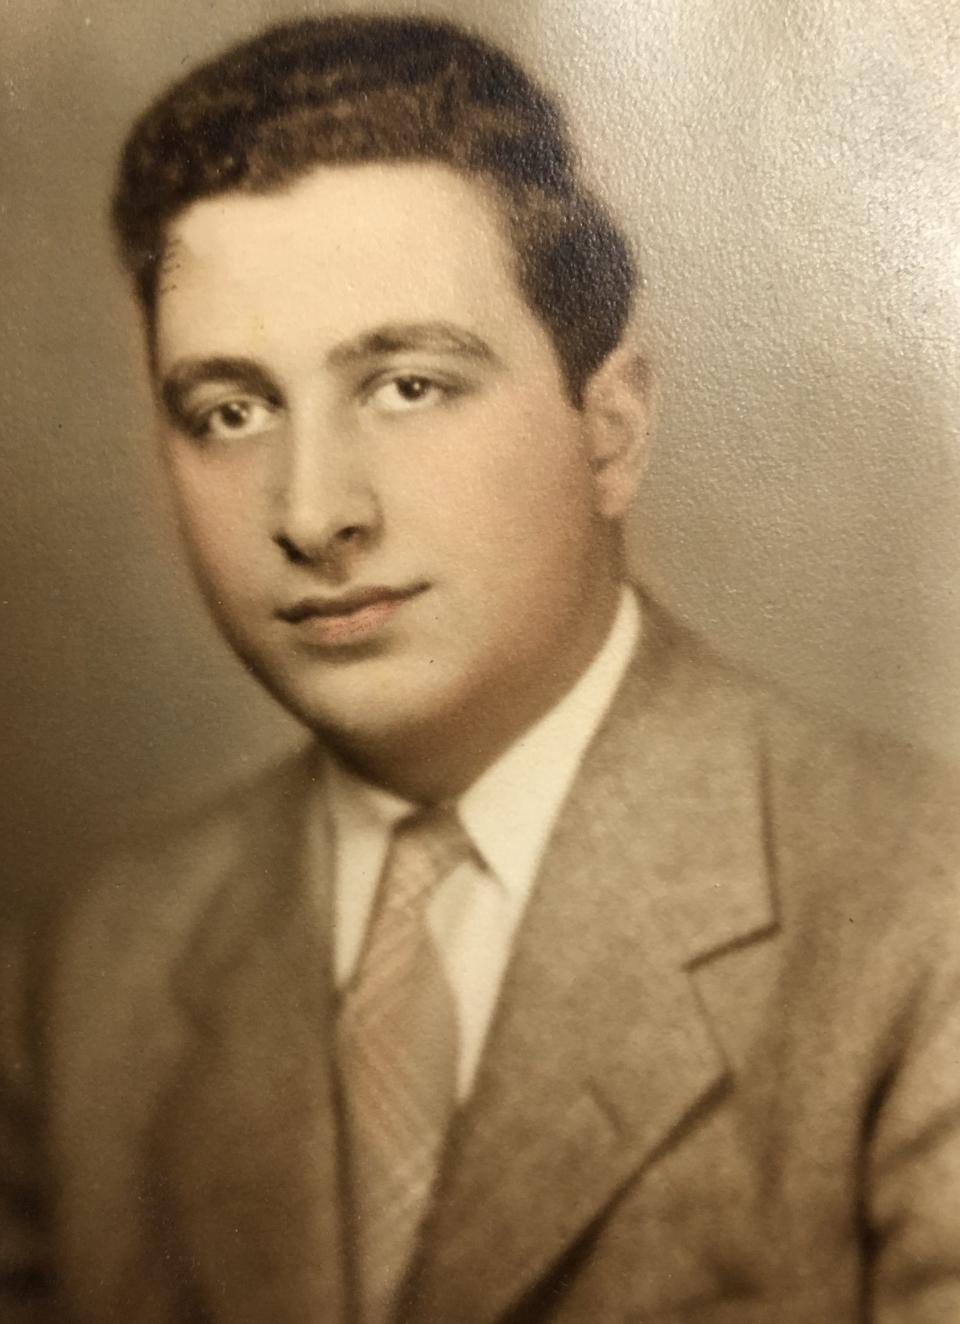 Carmine "Charlie" Mazzulli, of Hingham, as a high school graduate in 1946.